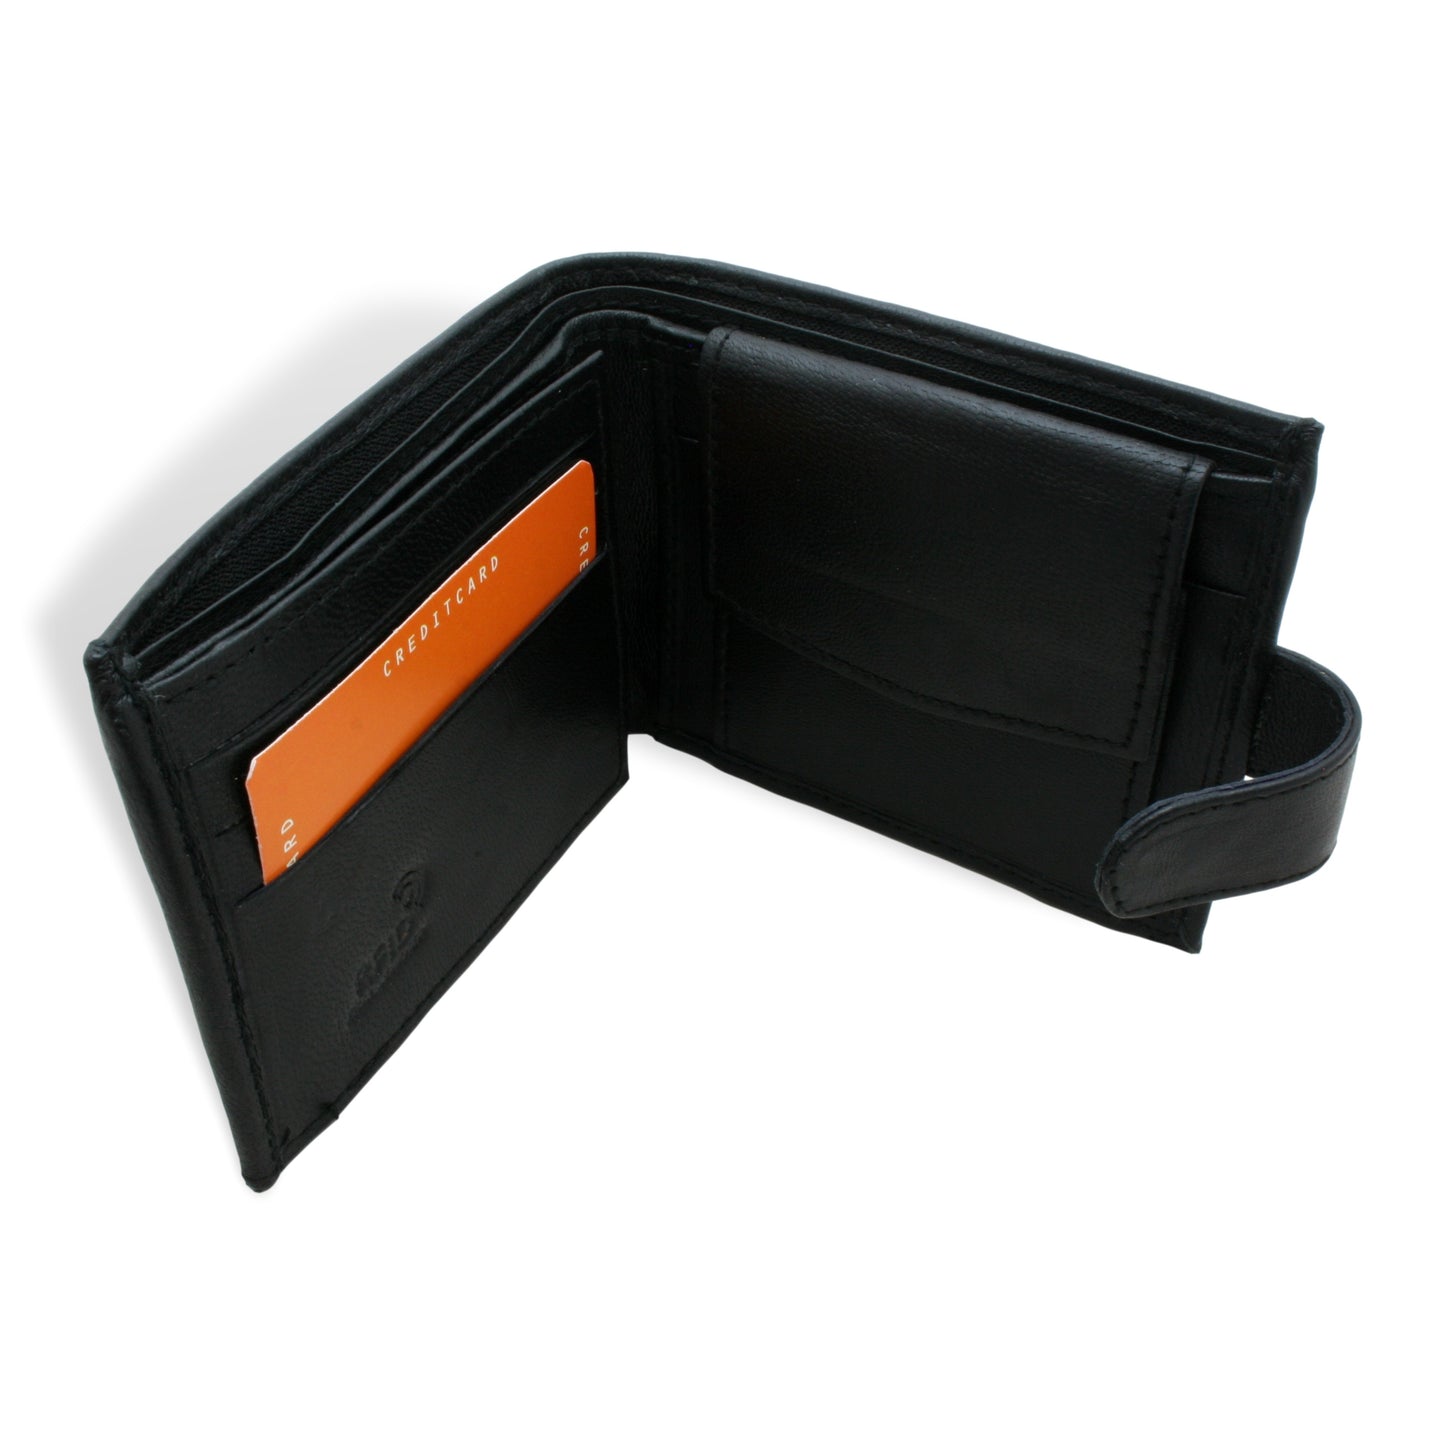 Pheasant Leather Wallet In Black Or Brown